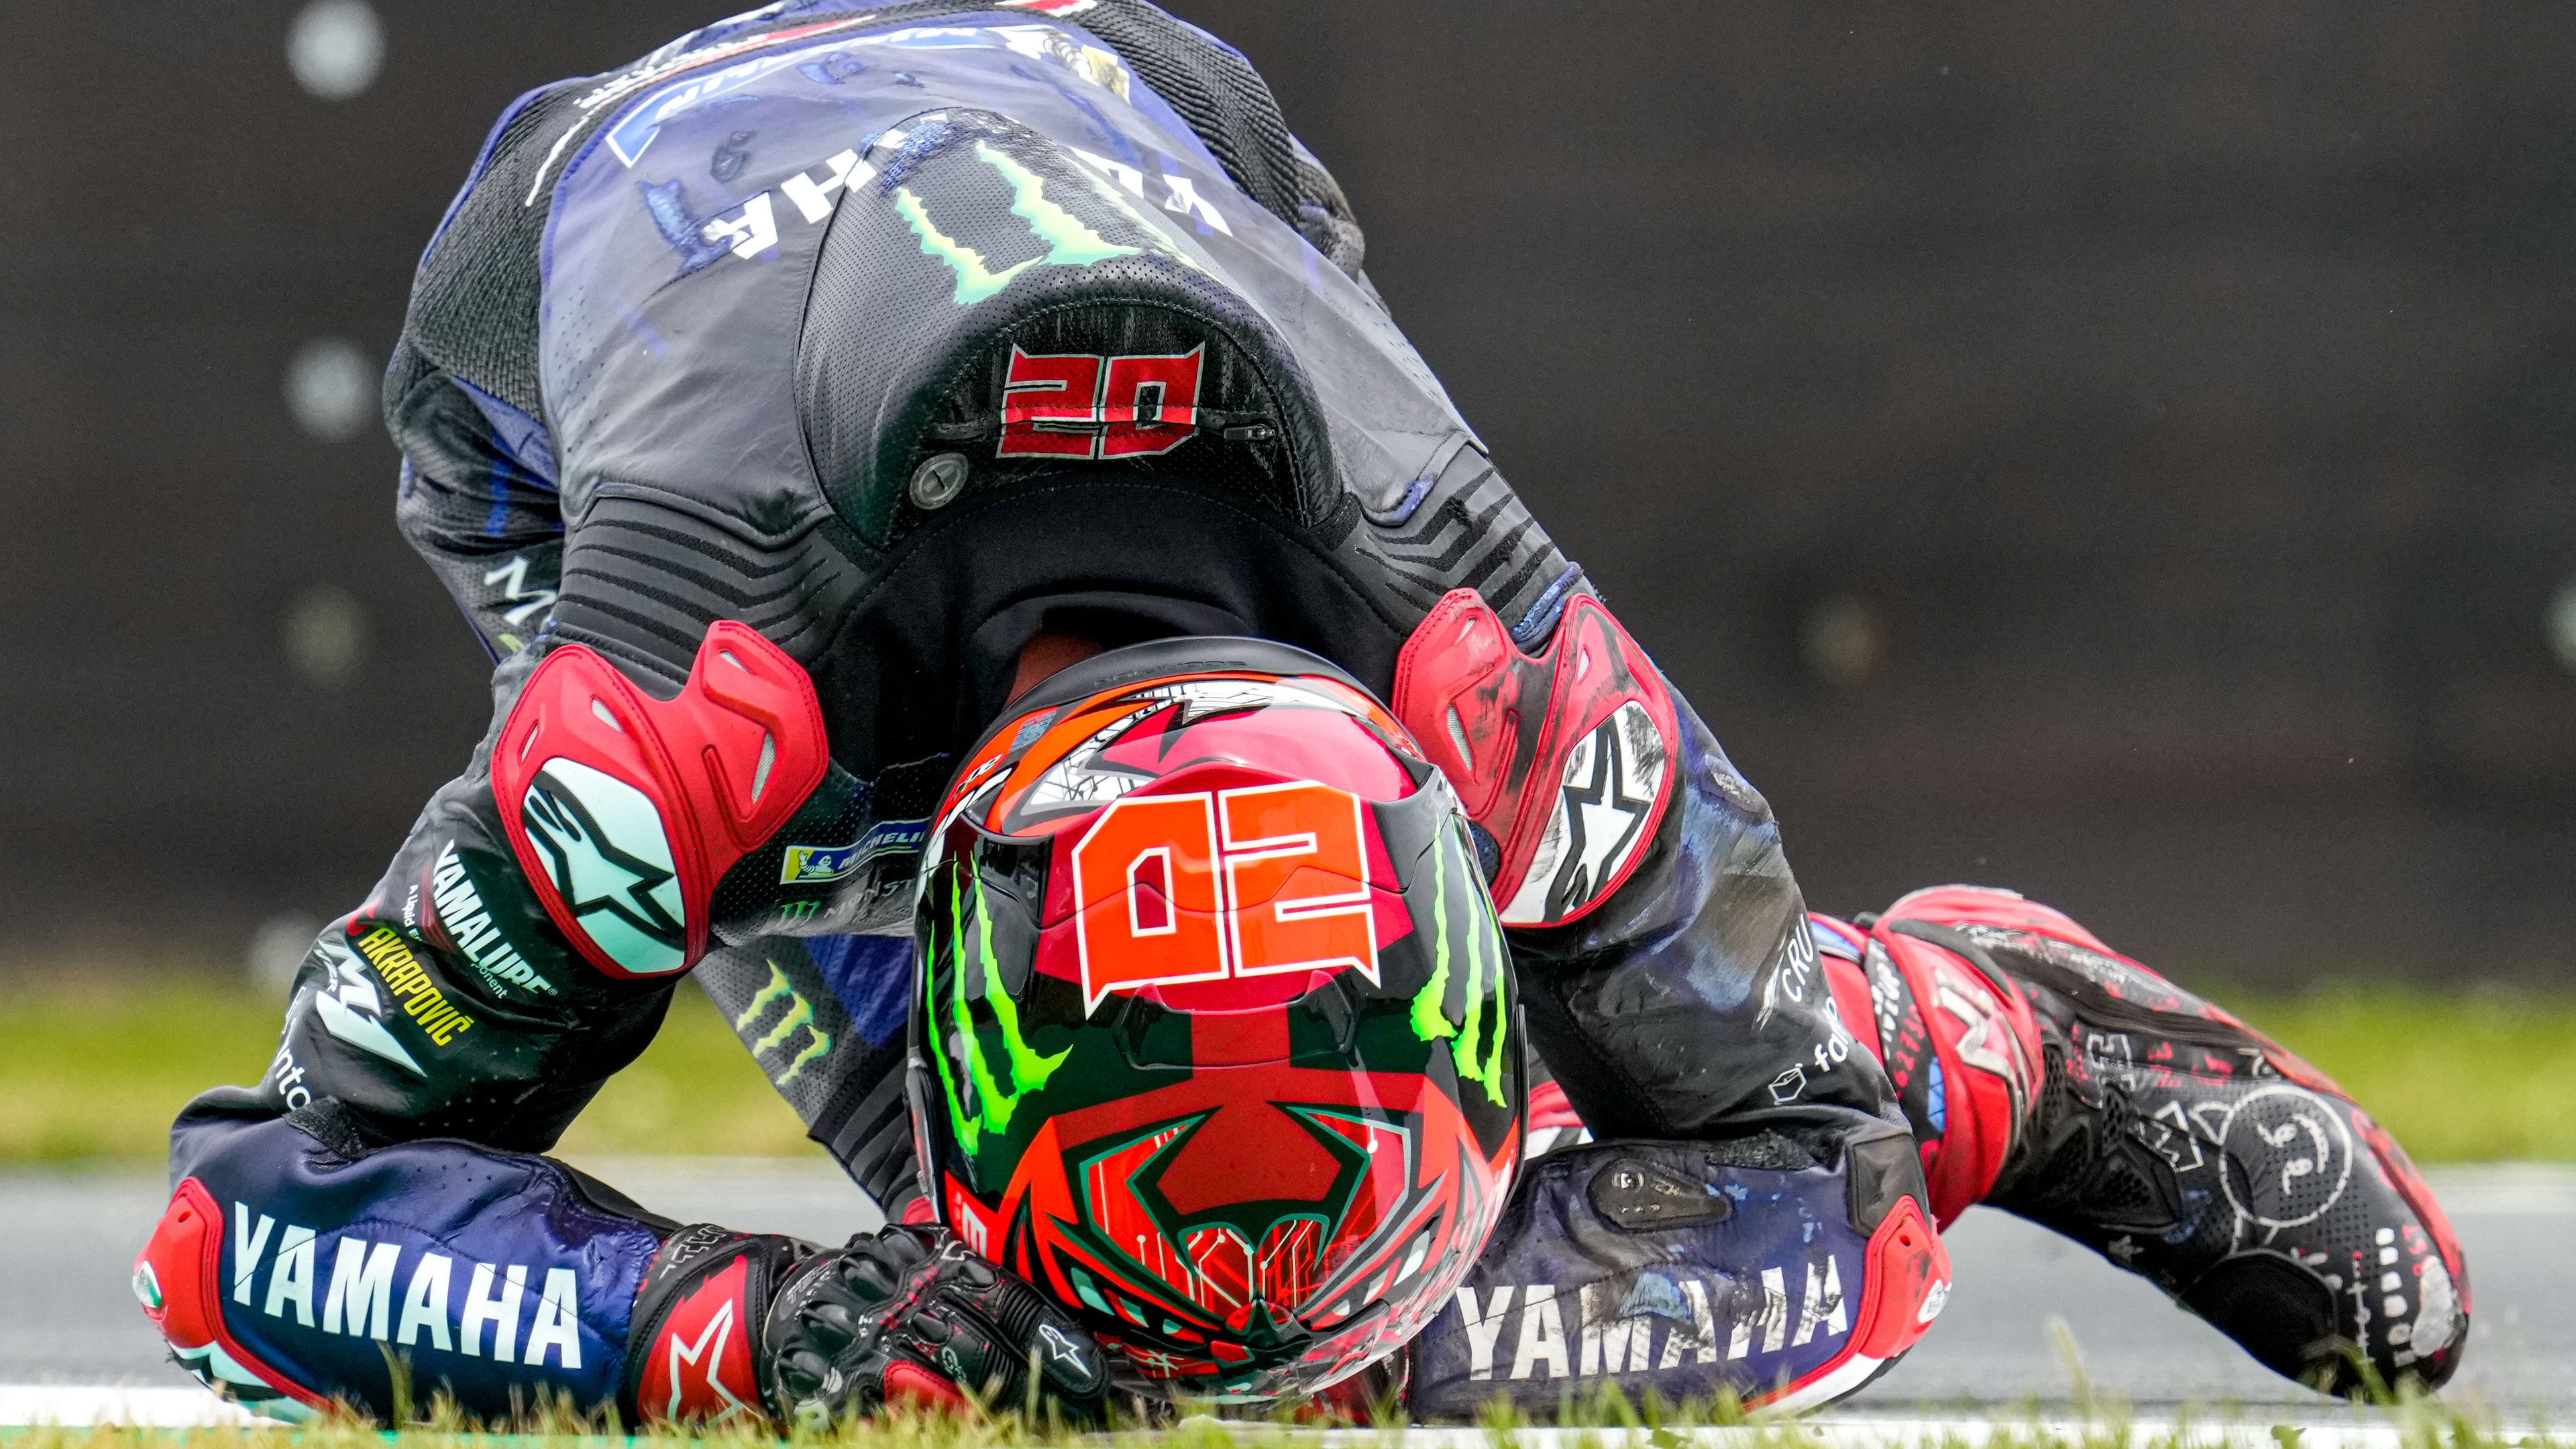 MotoGP champ slams 'inconsistent' officials